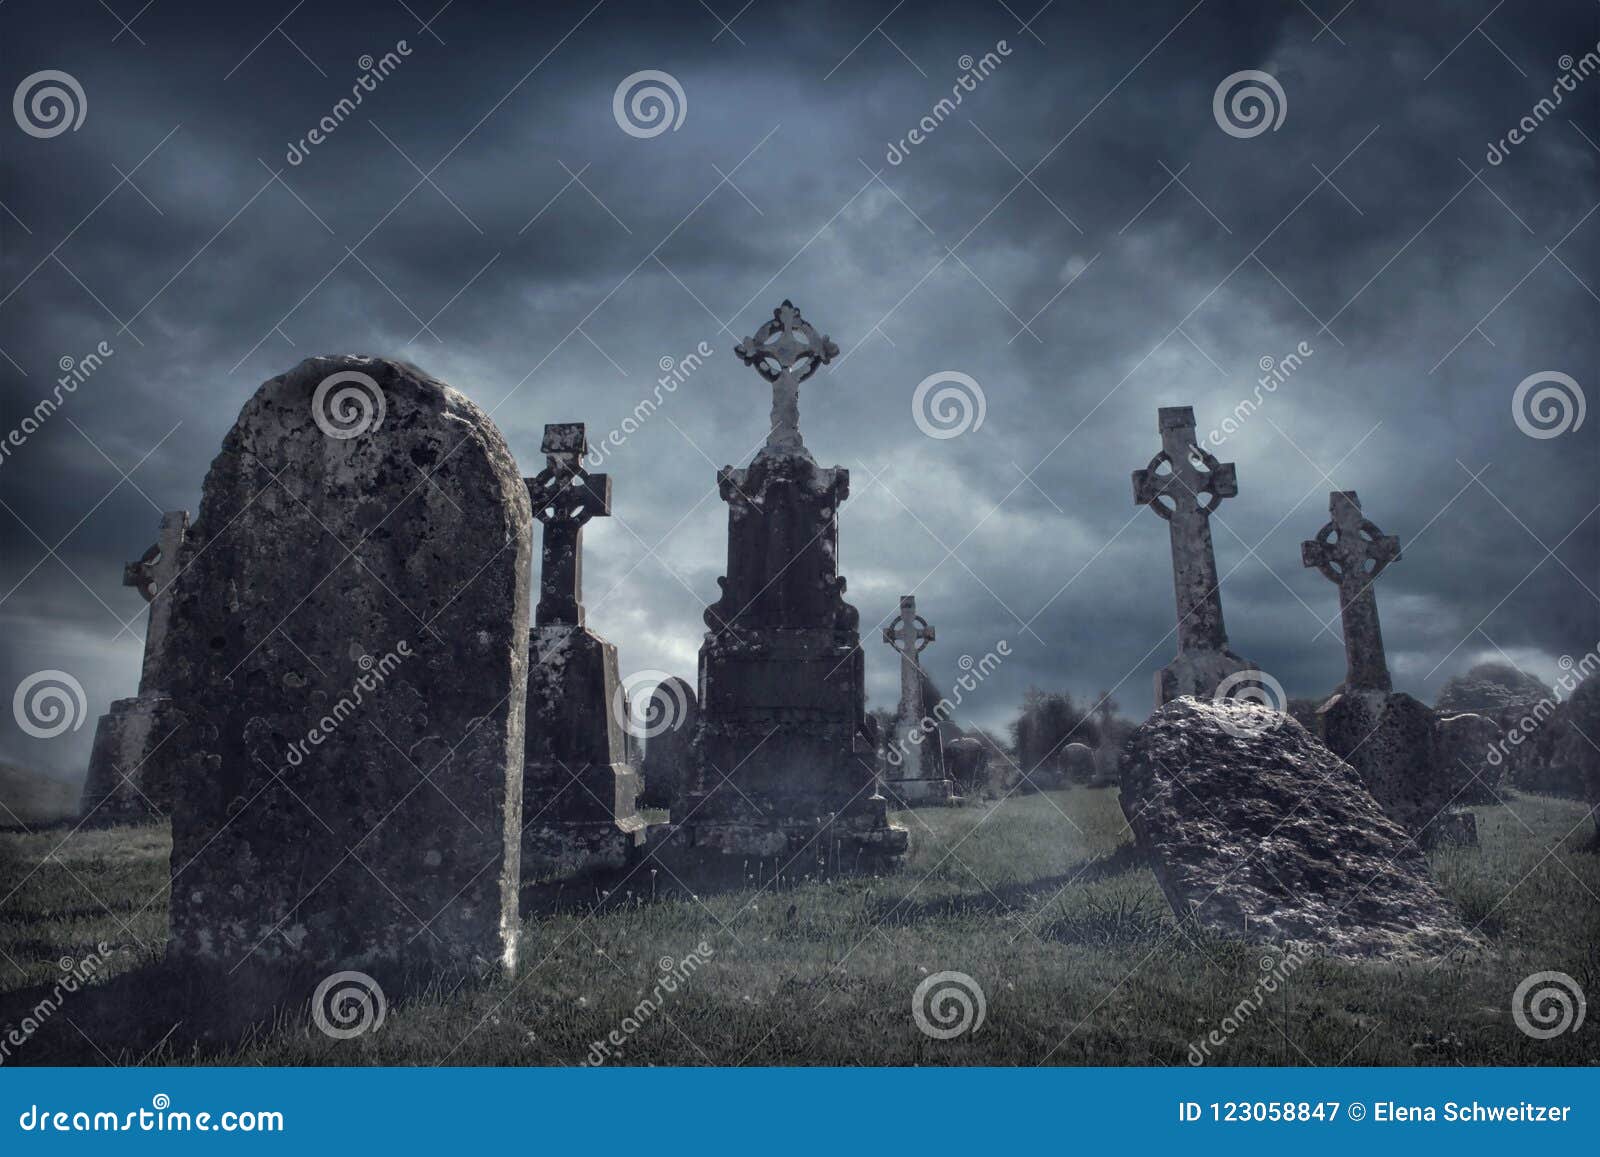 spooky old graveyard